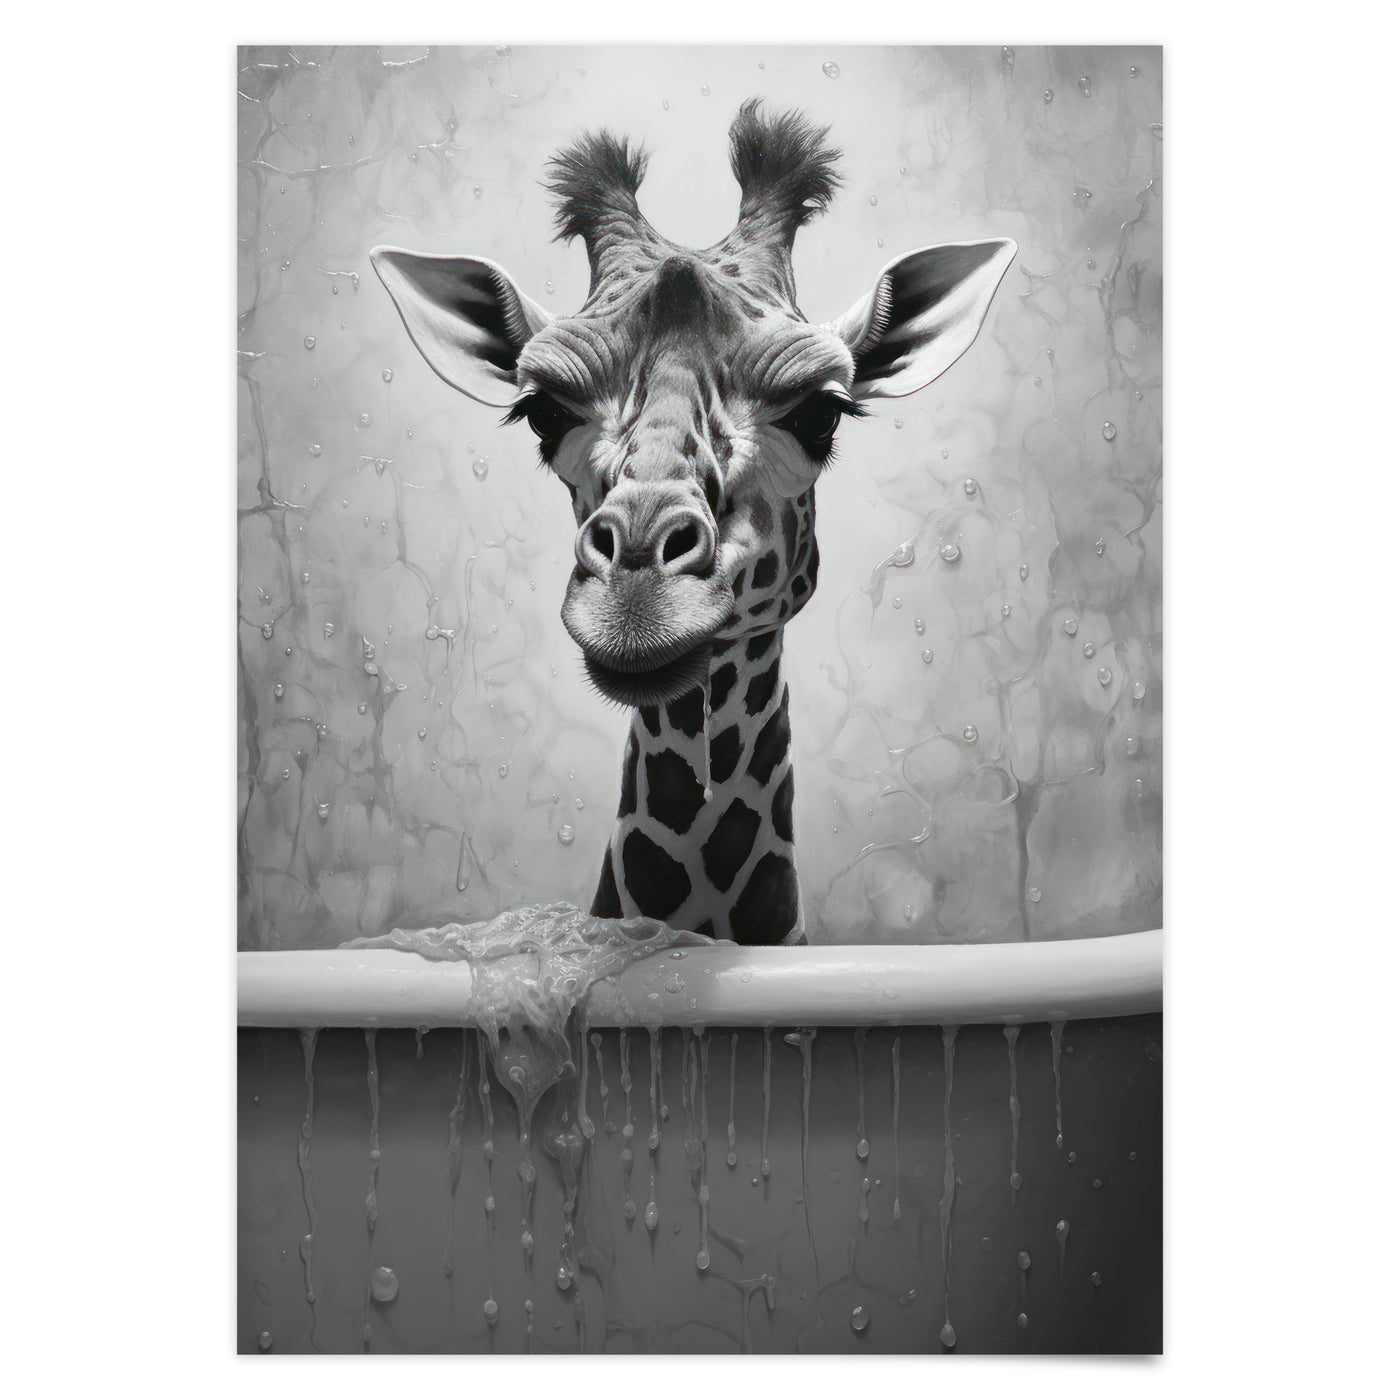 Badezimmer Poster Giraffe in Badewanne Badezimmer Bild Gäste WC Deko Bilder Lustig Trendige Poster Wanddeko Art Deco Wanddekoration